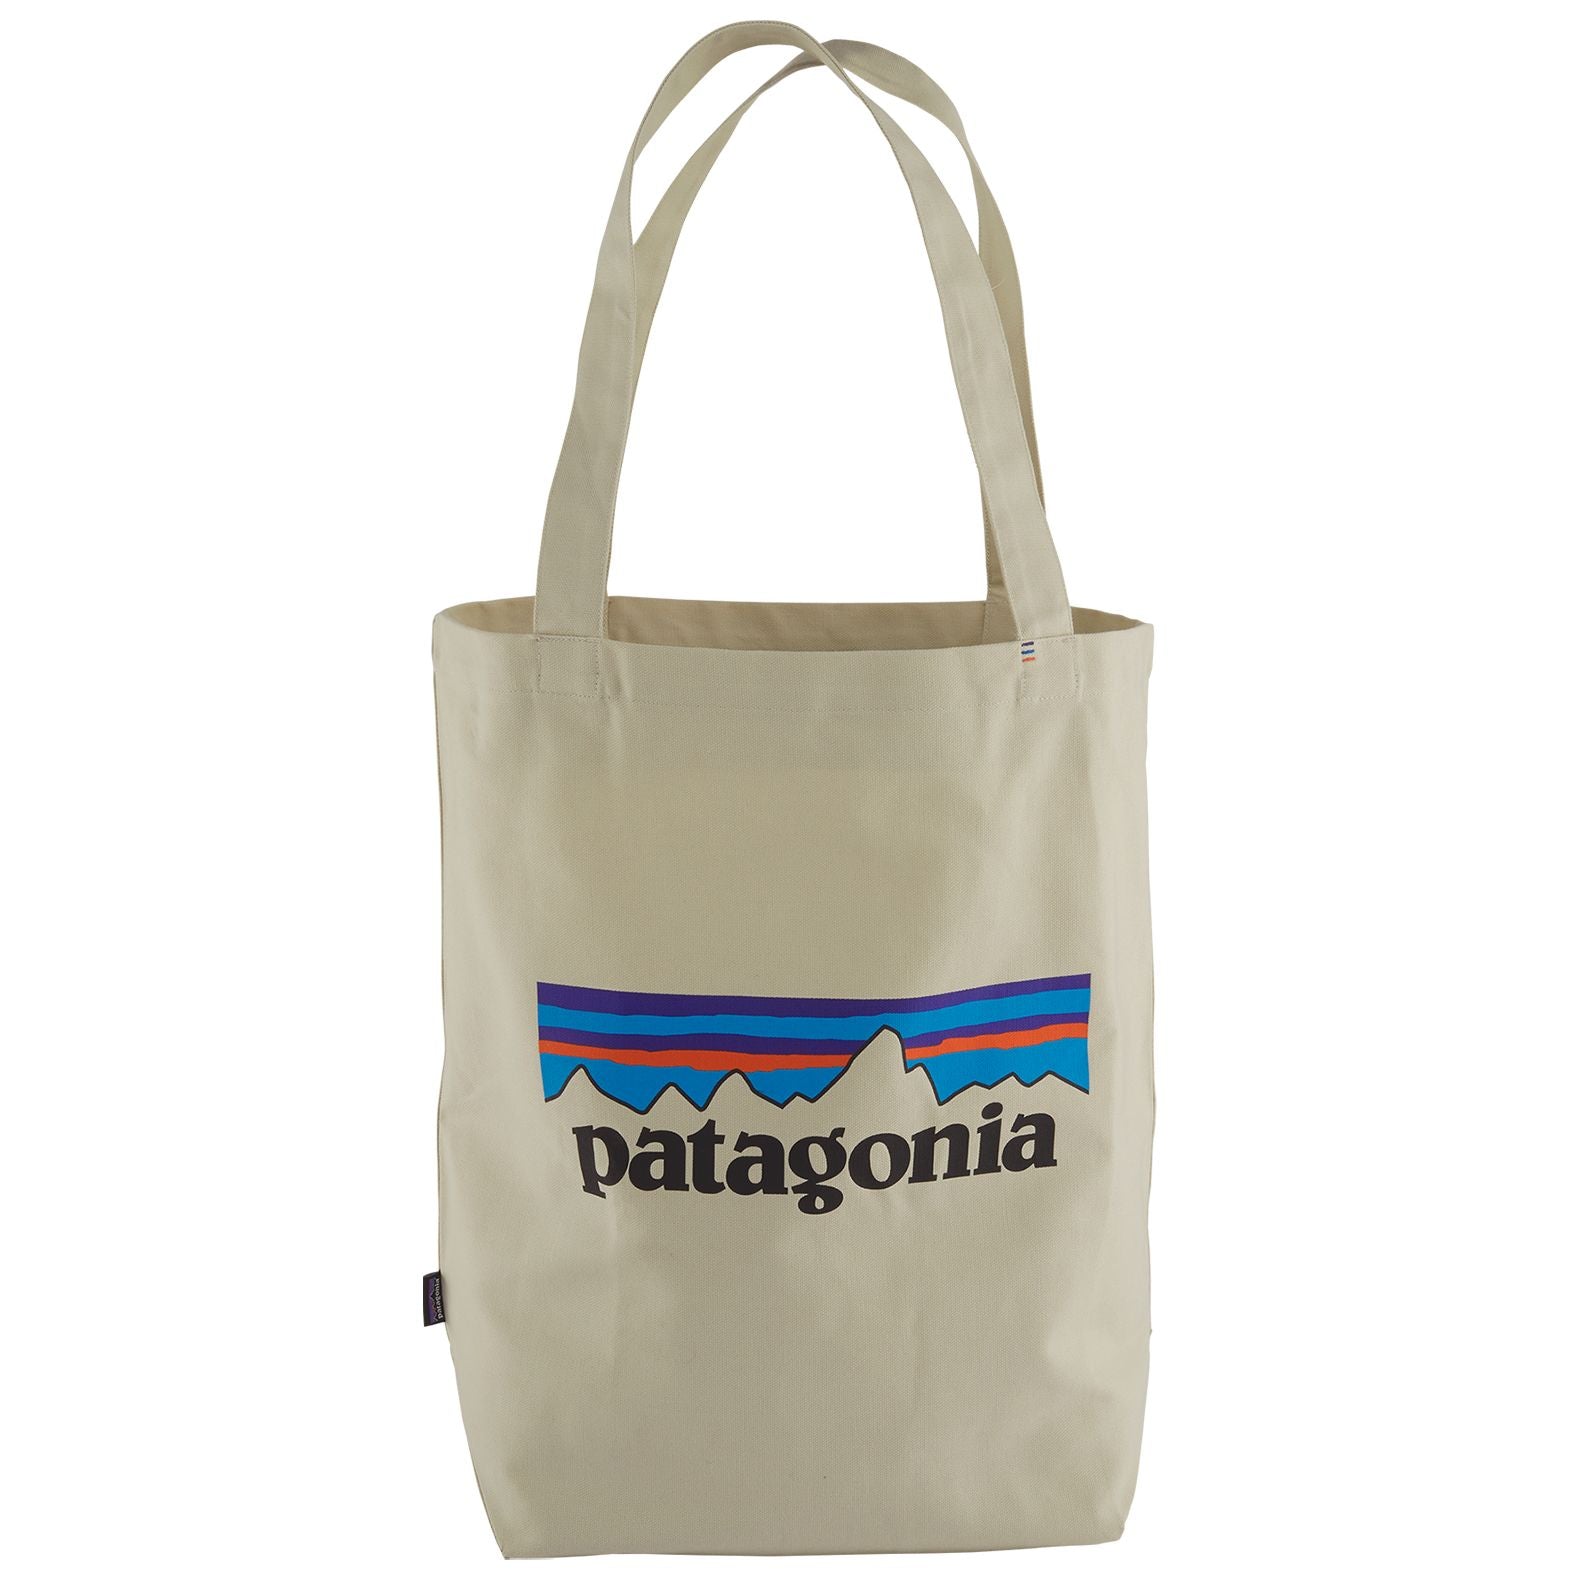 Patagonia Mini Tote Bag (bleached stone)